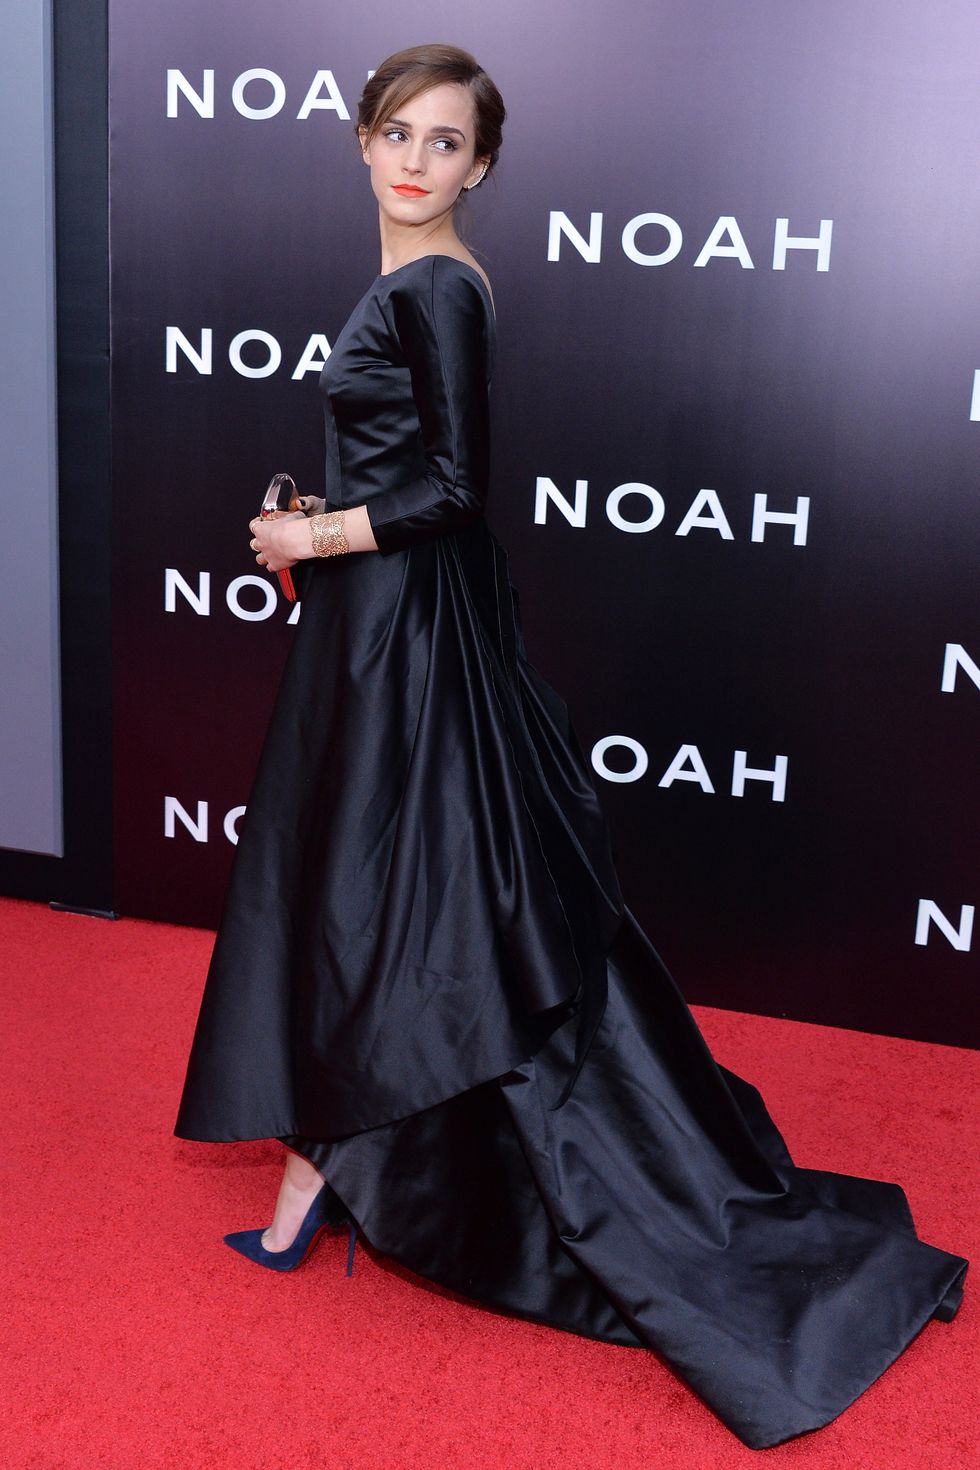 The actress attended the New York premiere of Noah wearing a dramatic black Oscar de la Renta dress.